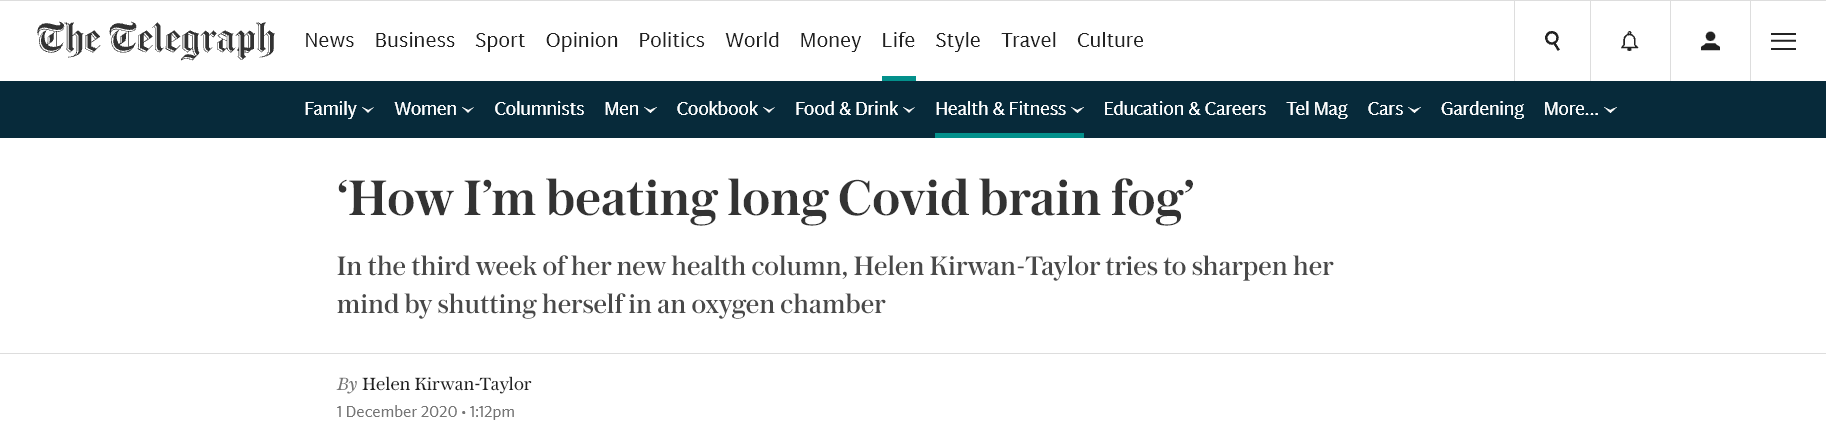 covid brain fog header news